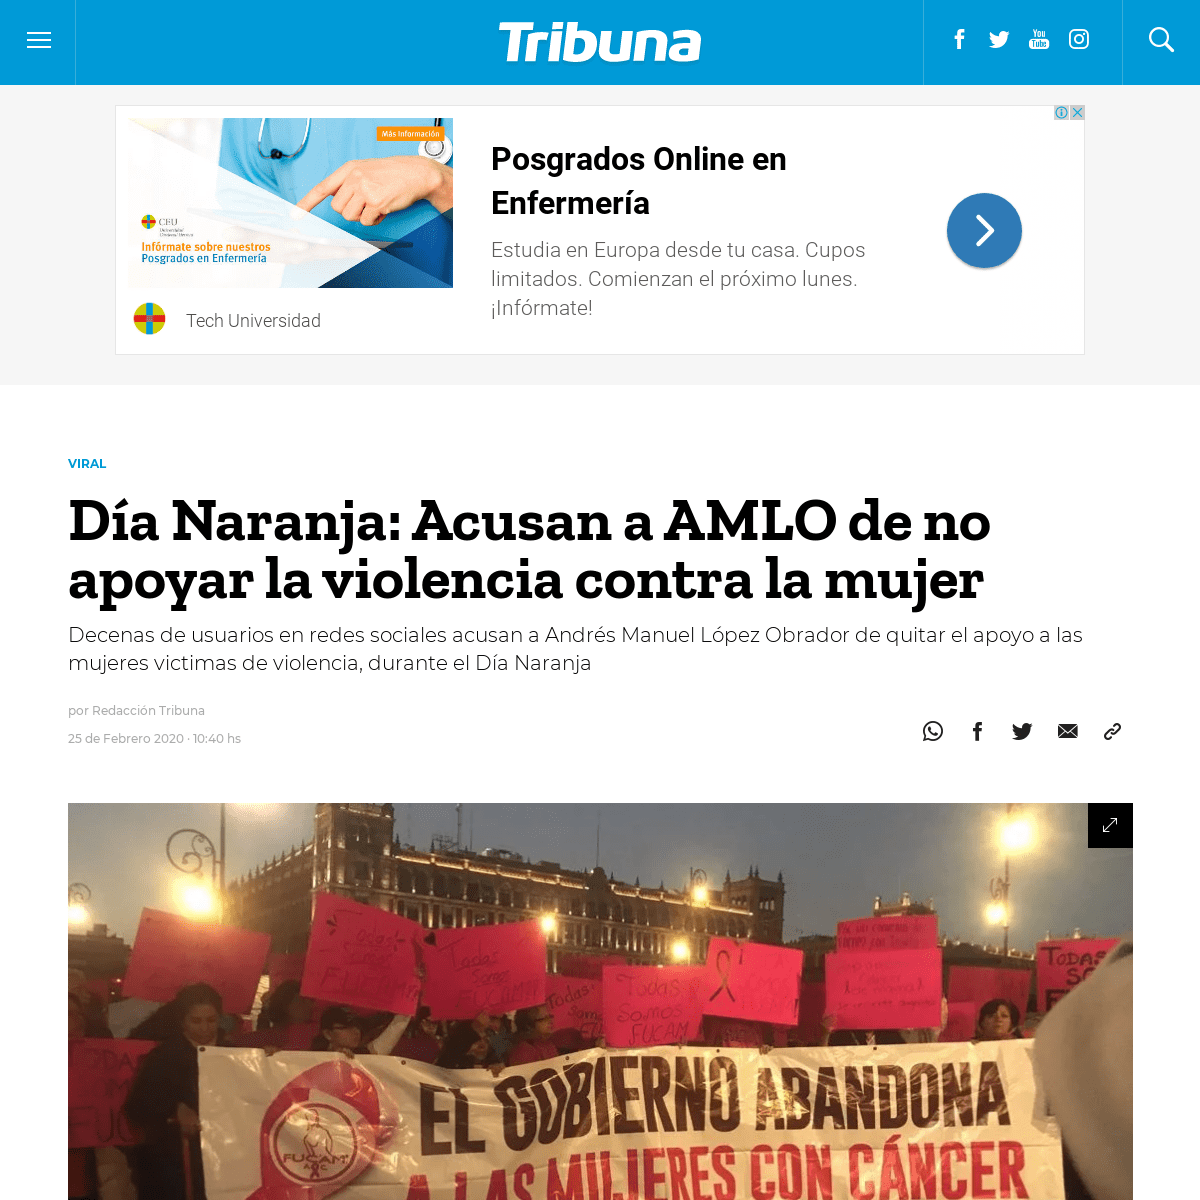 A complete backup of www.tribuna.com.mx/viral/Dia-Naranja-Acusan-a-AMLO-de-no-apoyar-la-violencia-contra-la-mujer-20200225-0065.